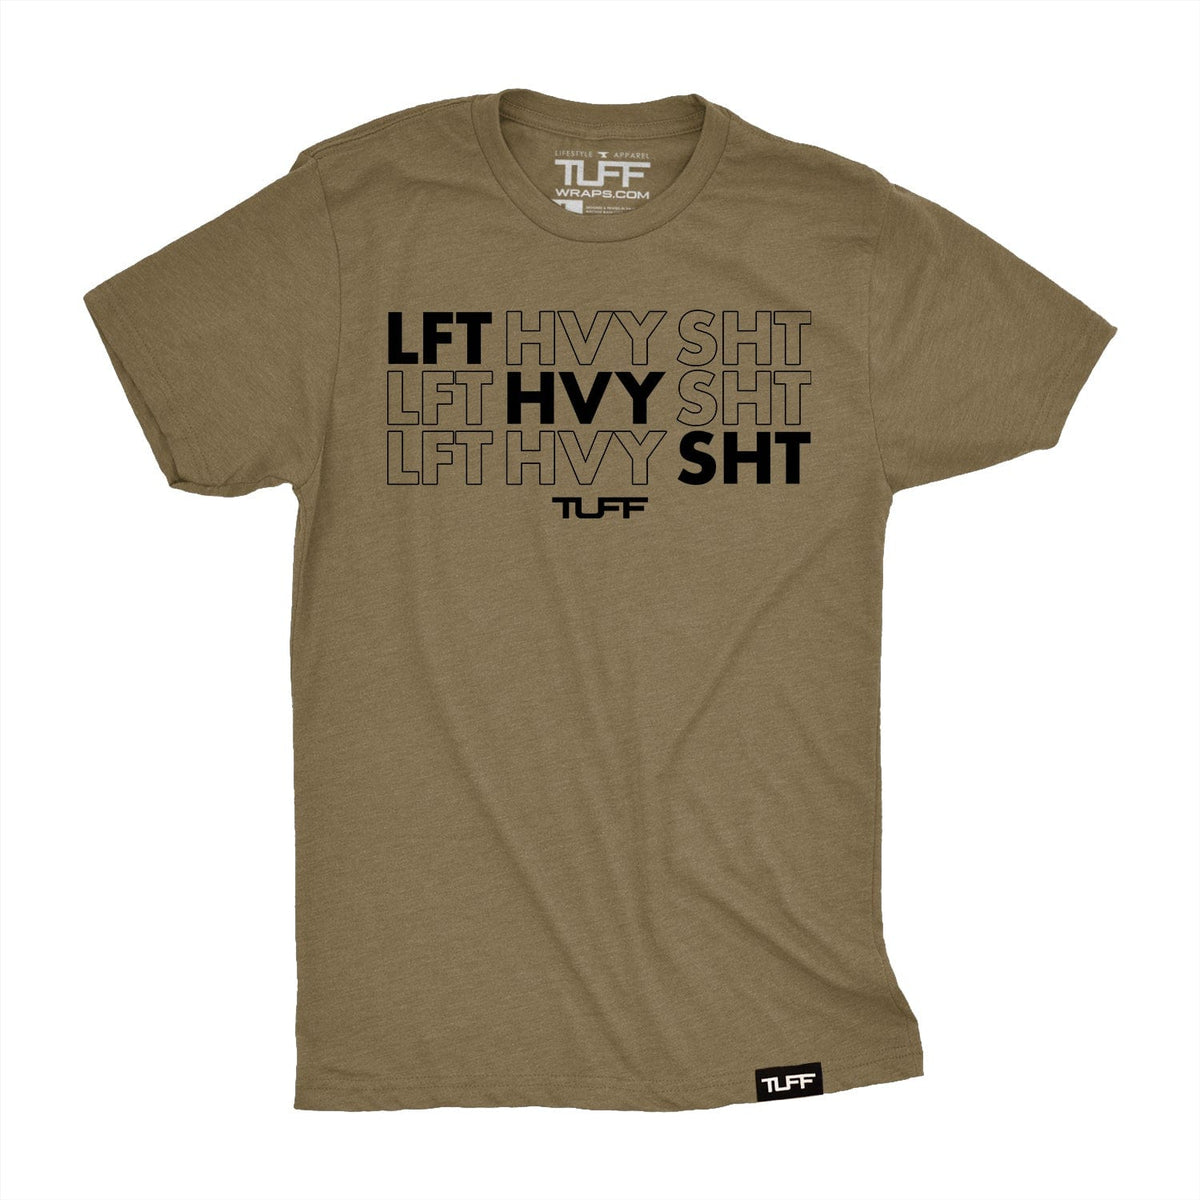 LFT HVY SHT Tee S / Military Green TuffWraps.com